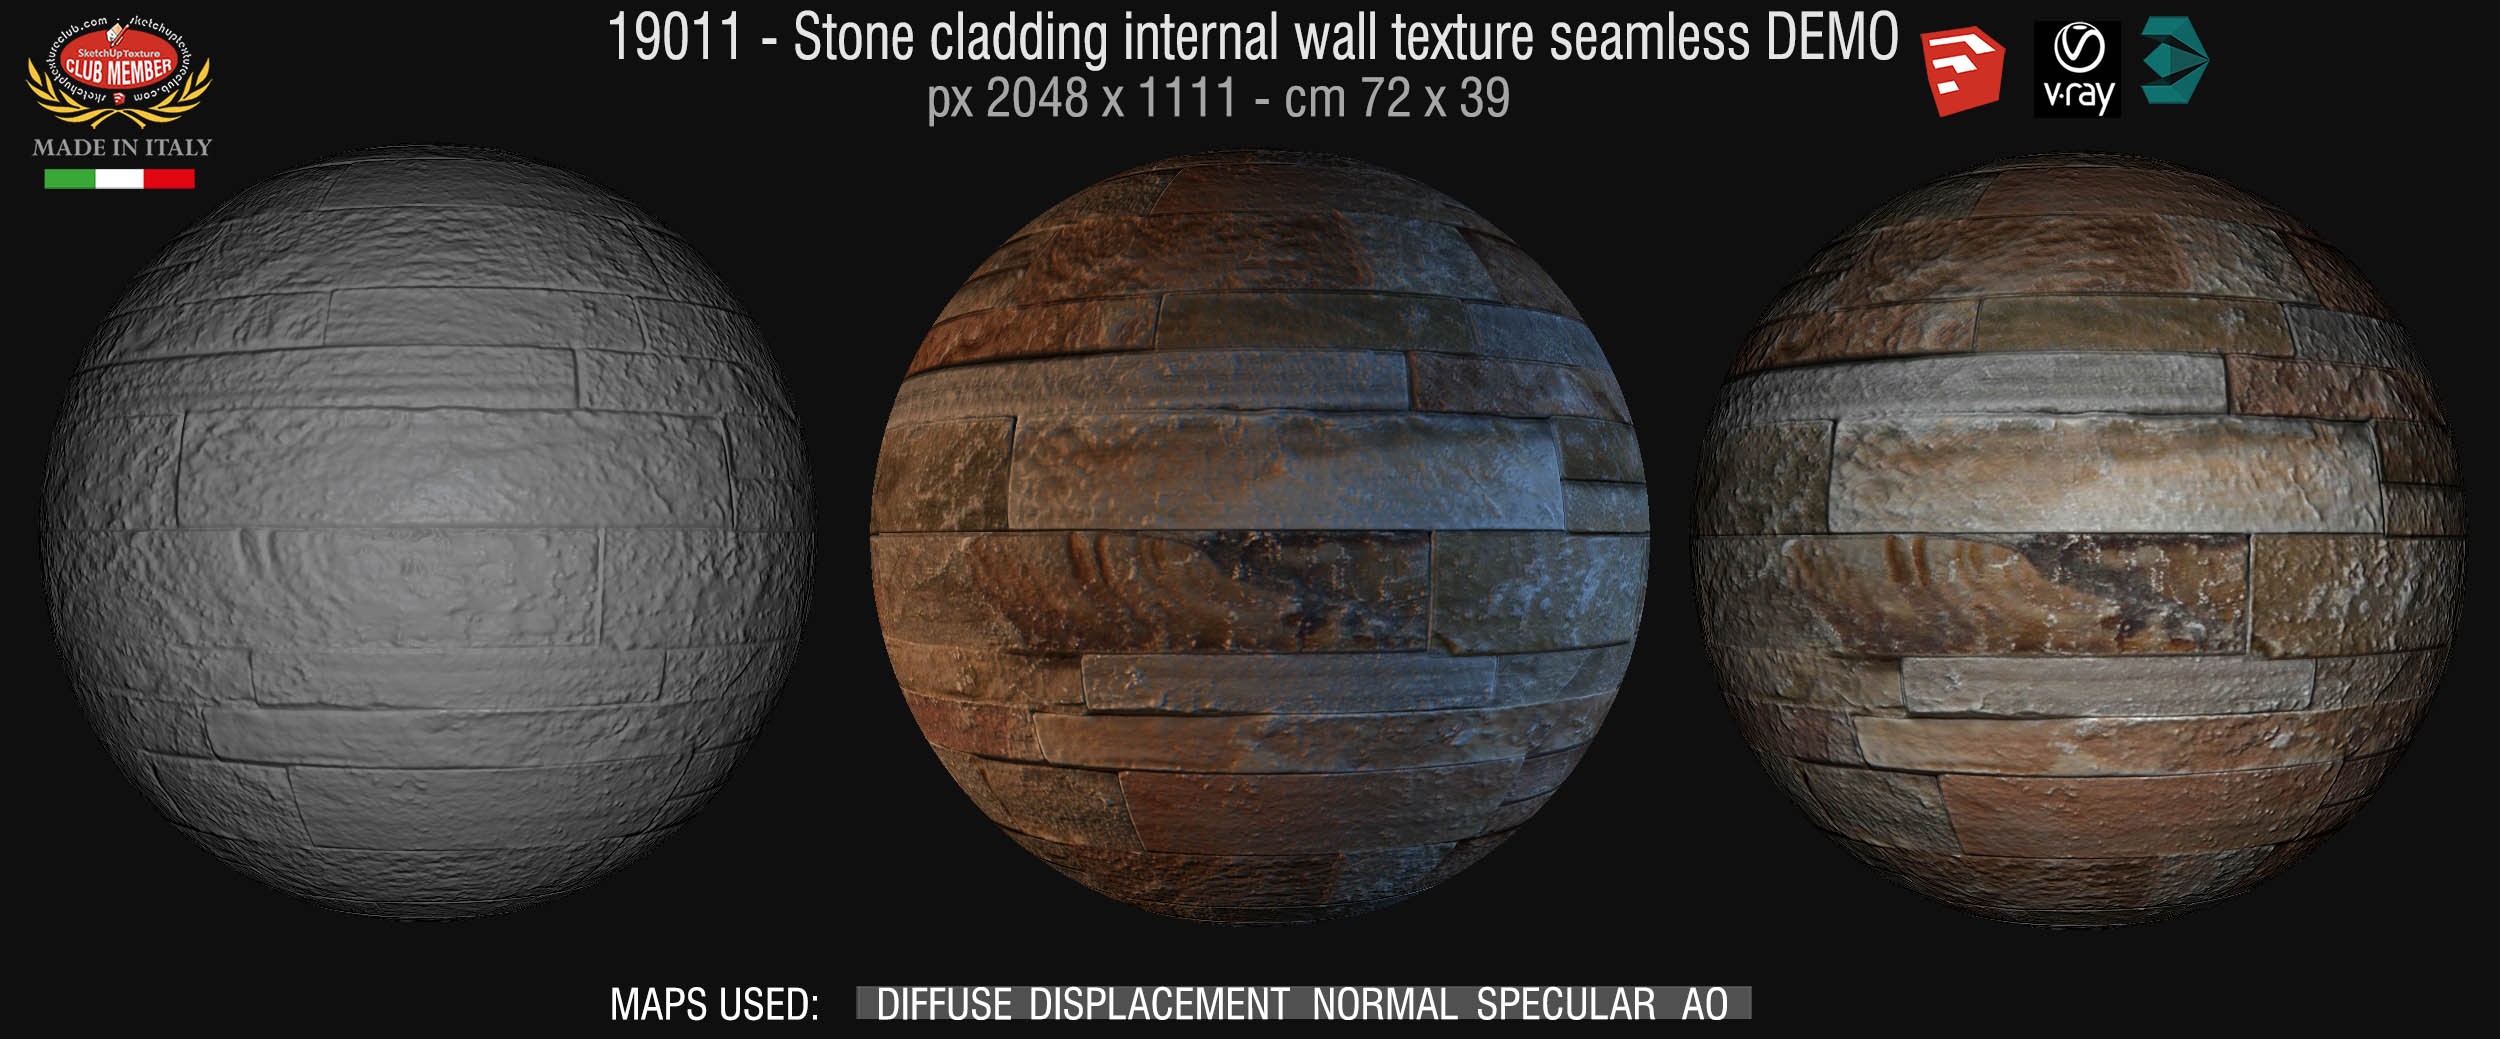 19011 Stone cladding internal wall texture + maps DEMO